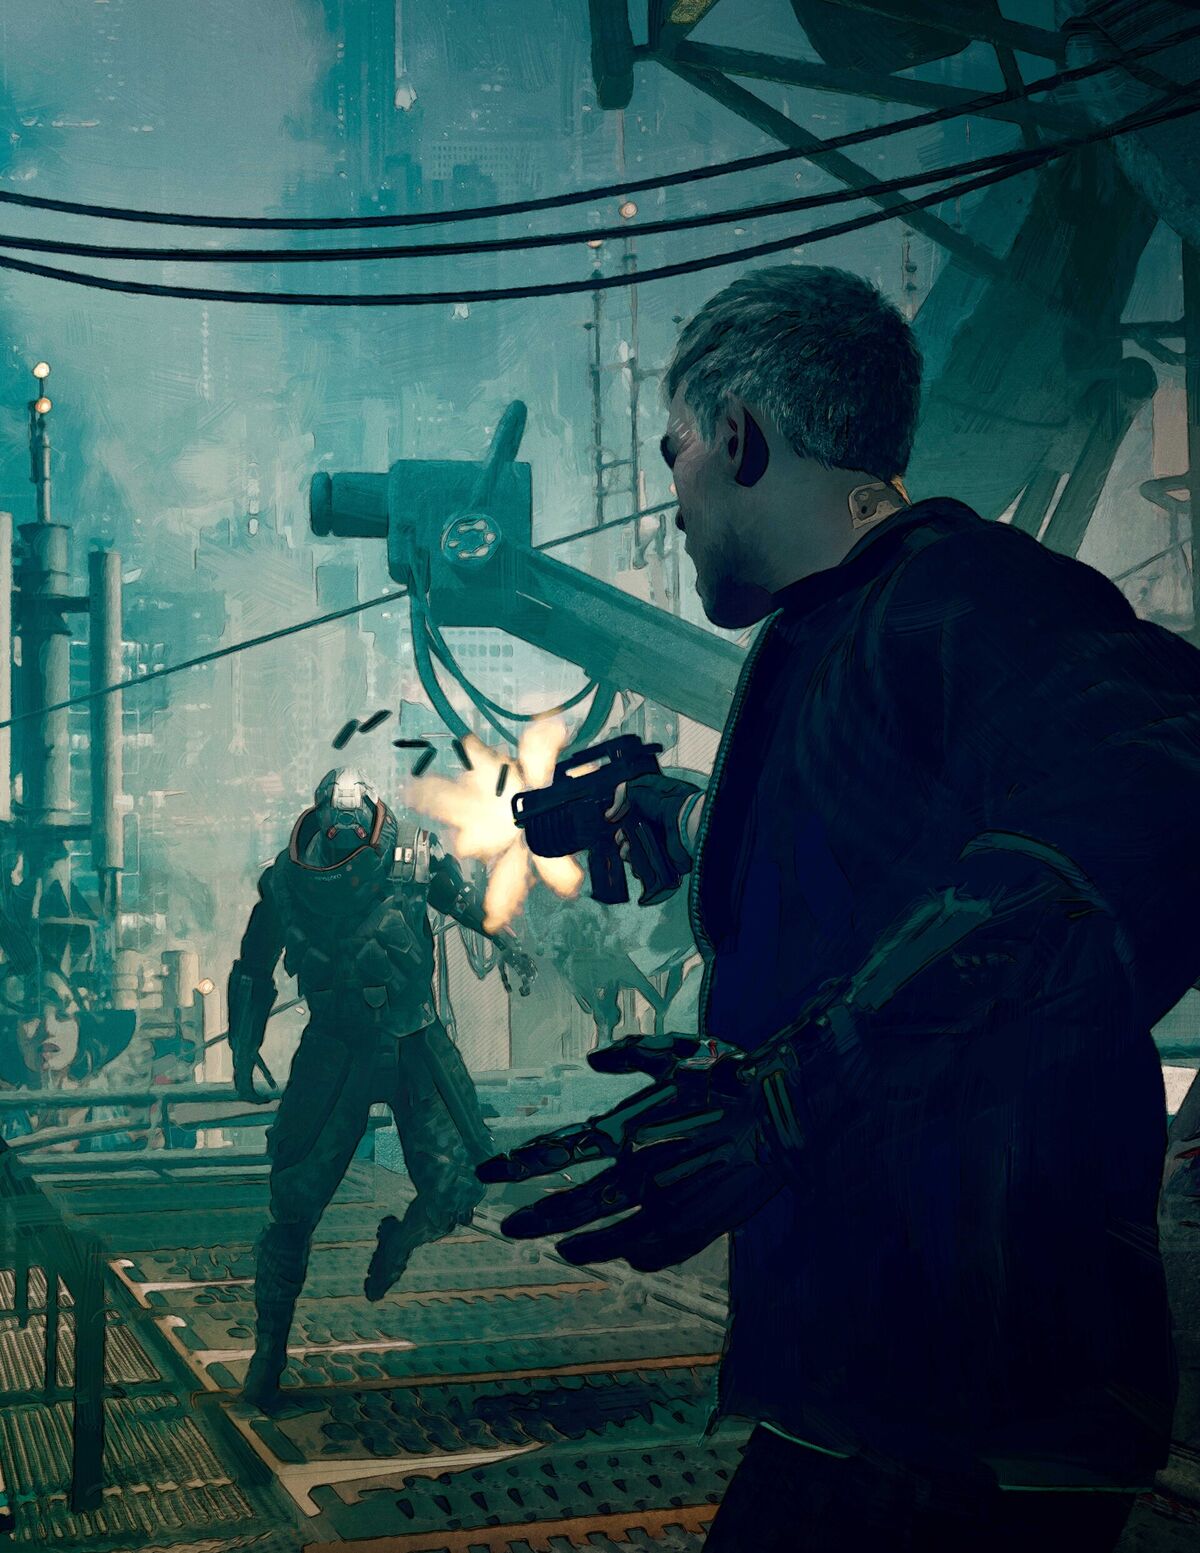 Cyberpunk 2077 mega-resurgence overtakes Modern Warfare 2 as